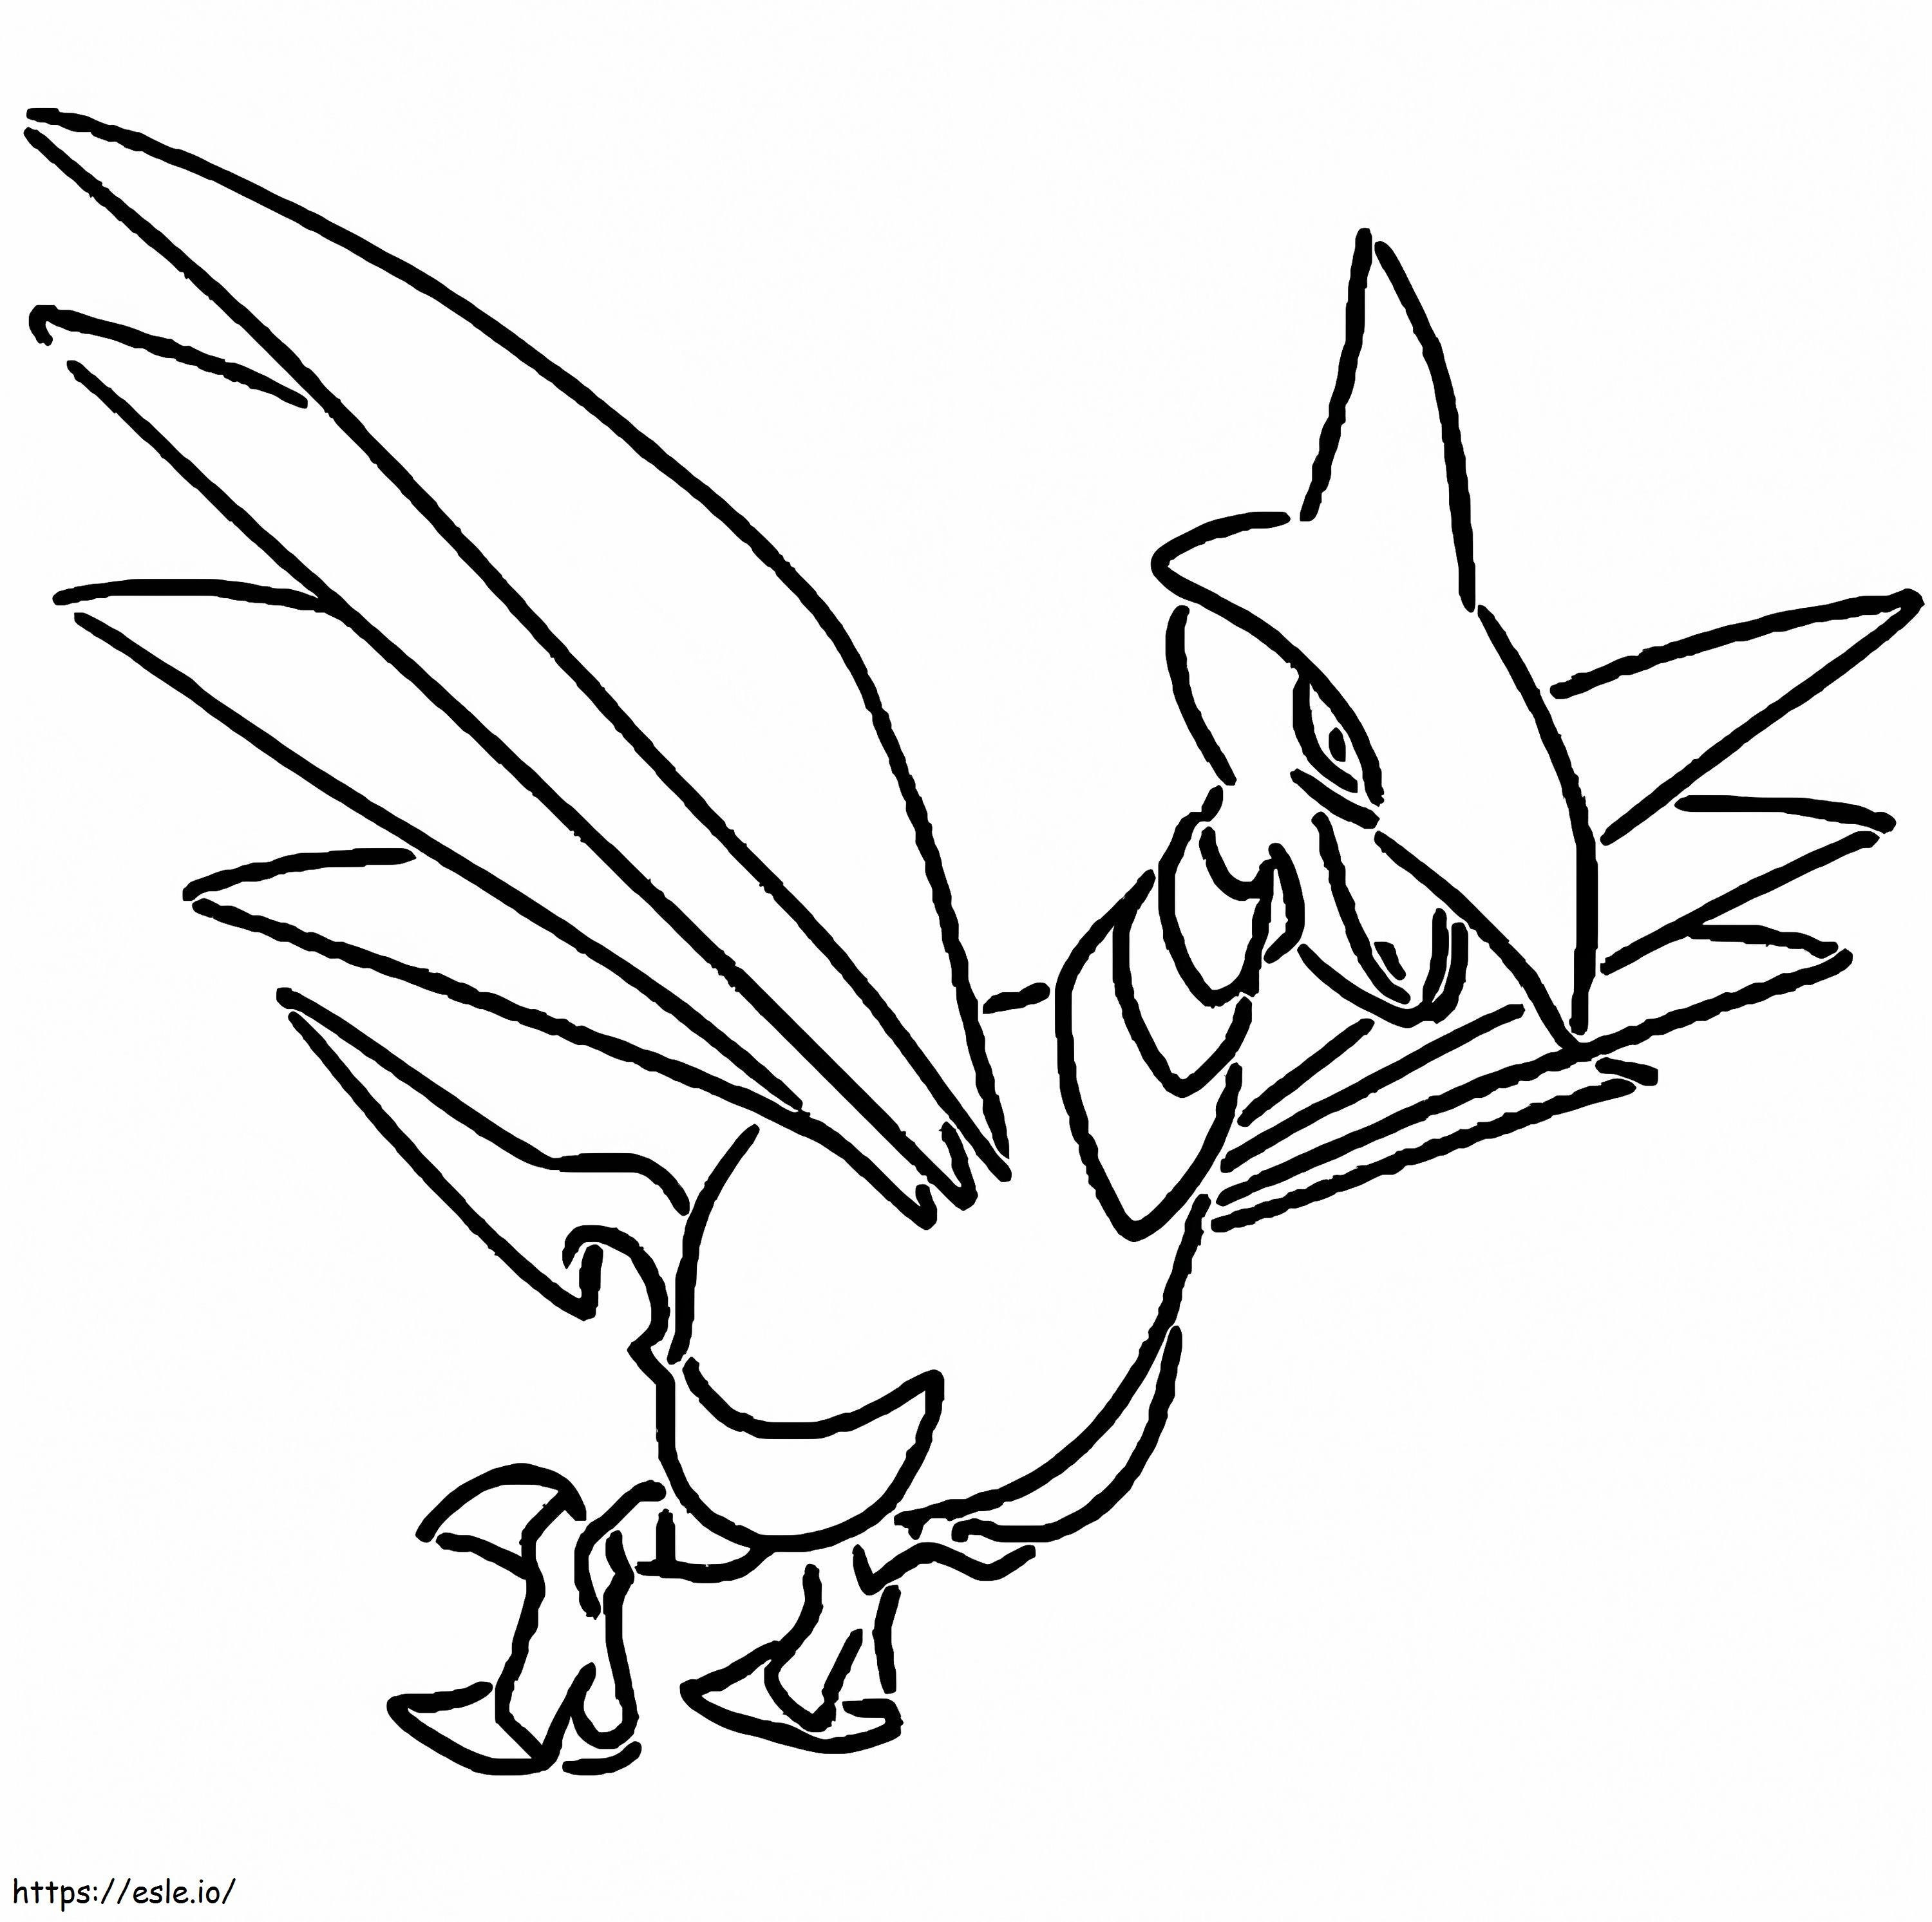 Skarmory-Pokémon ausmalbilder